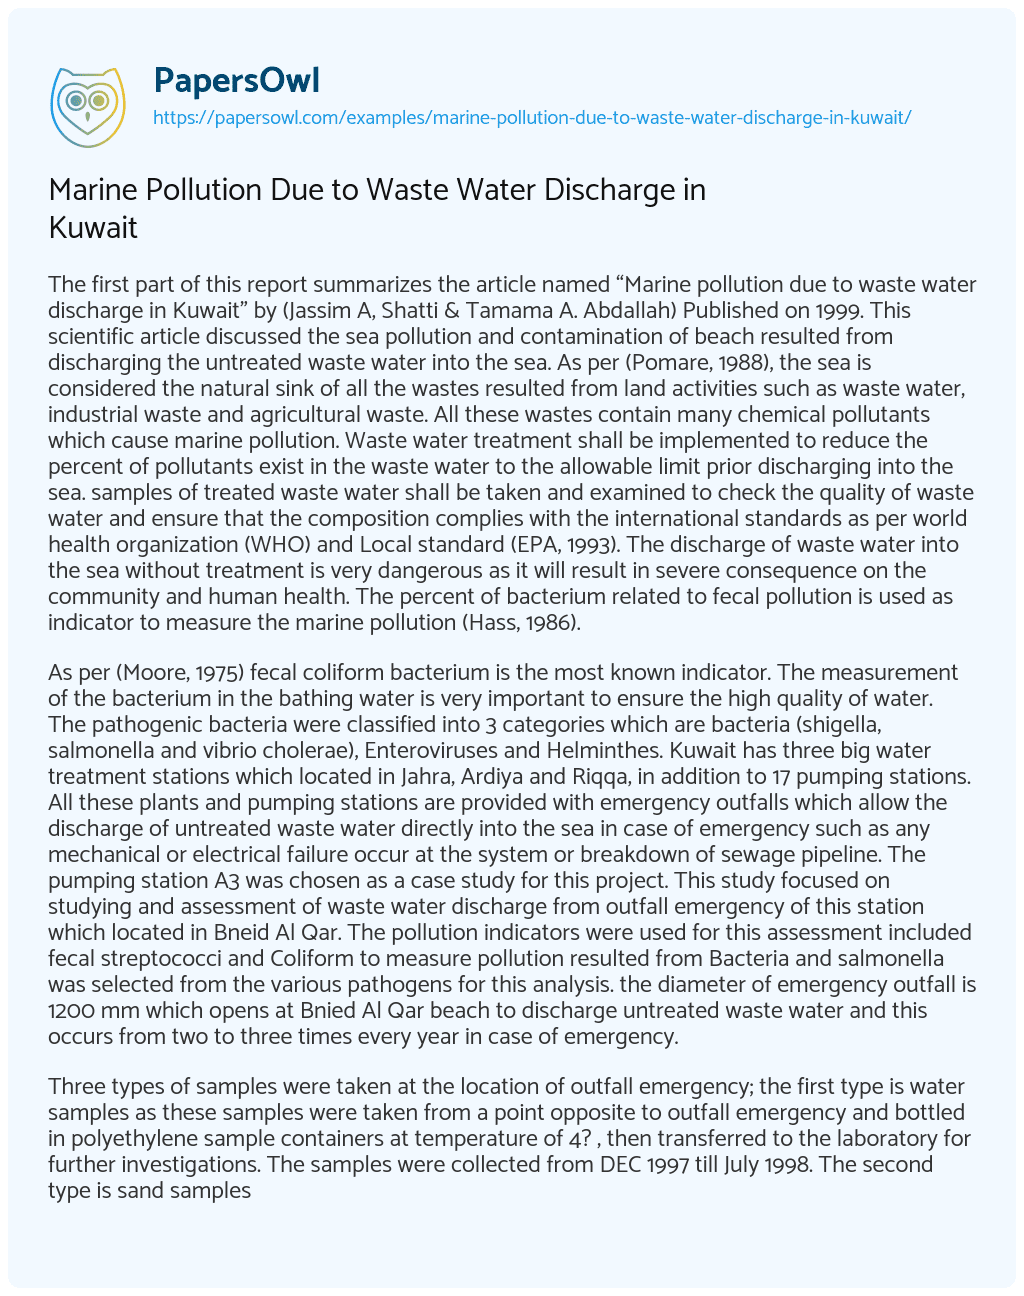 Essay on Marine Pollution Due to Waste Water Discharge in Kuwait